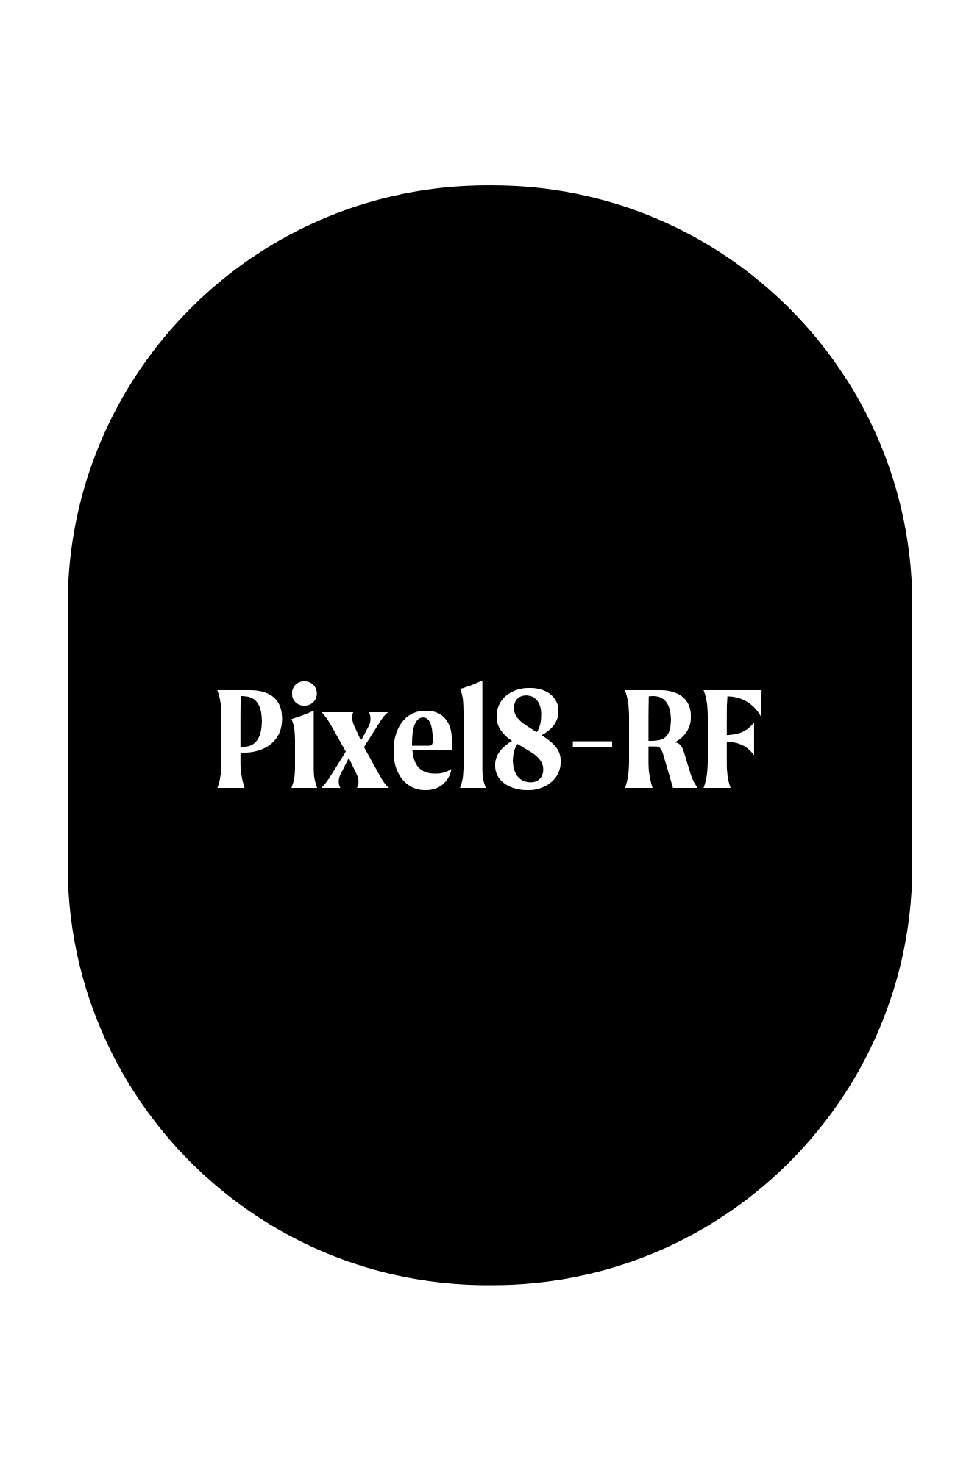 Pixel8-RF